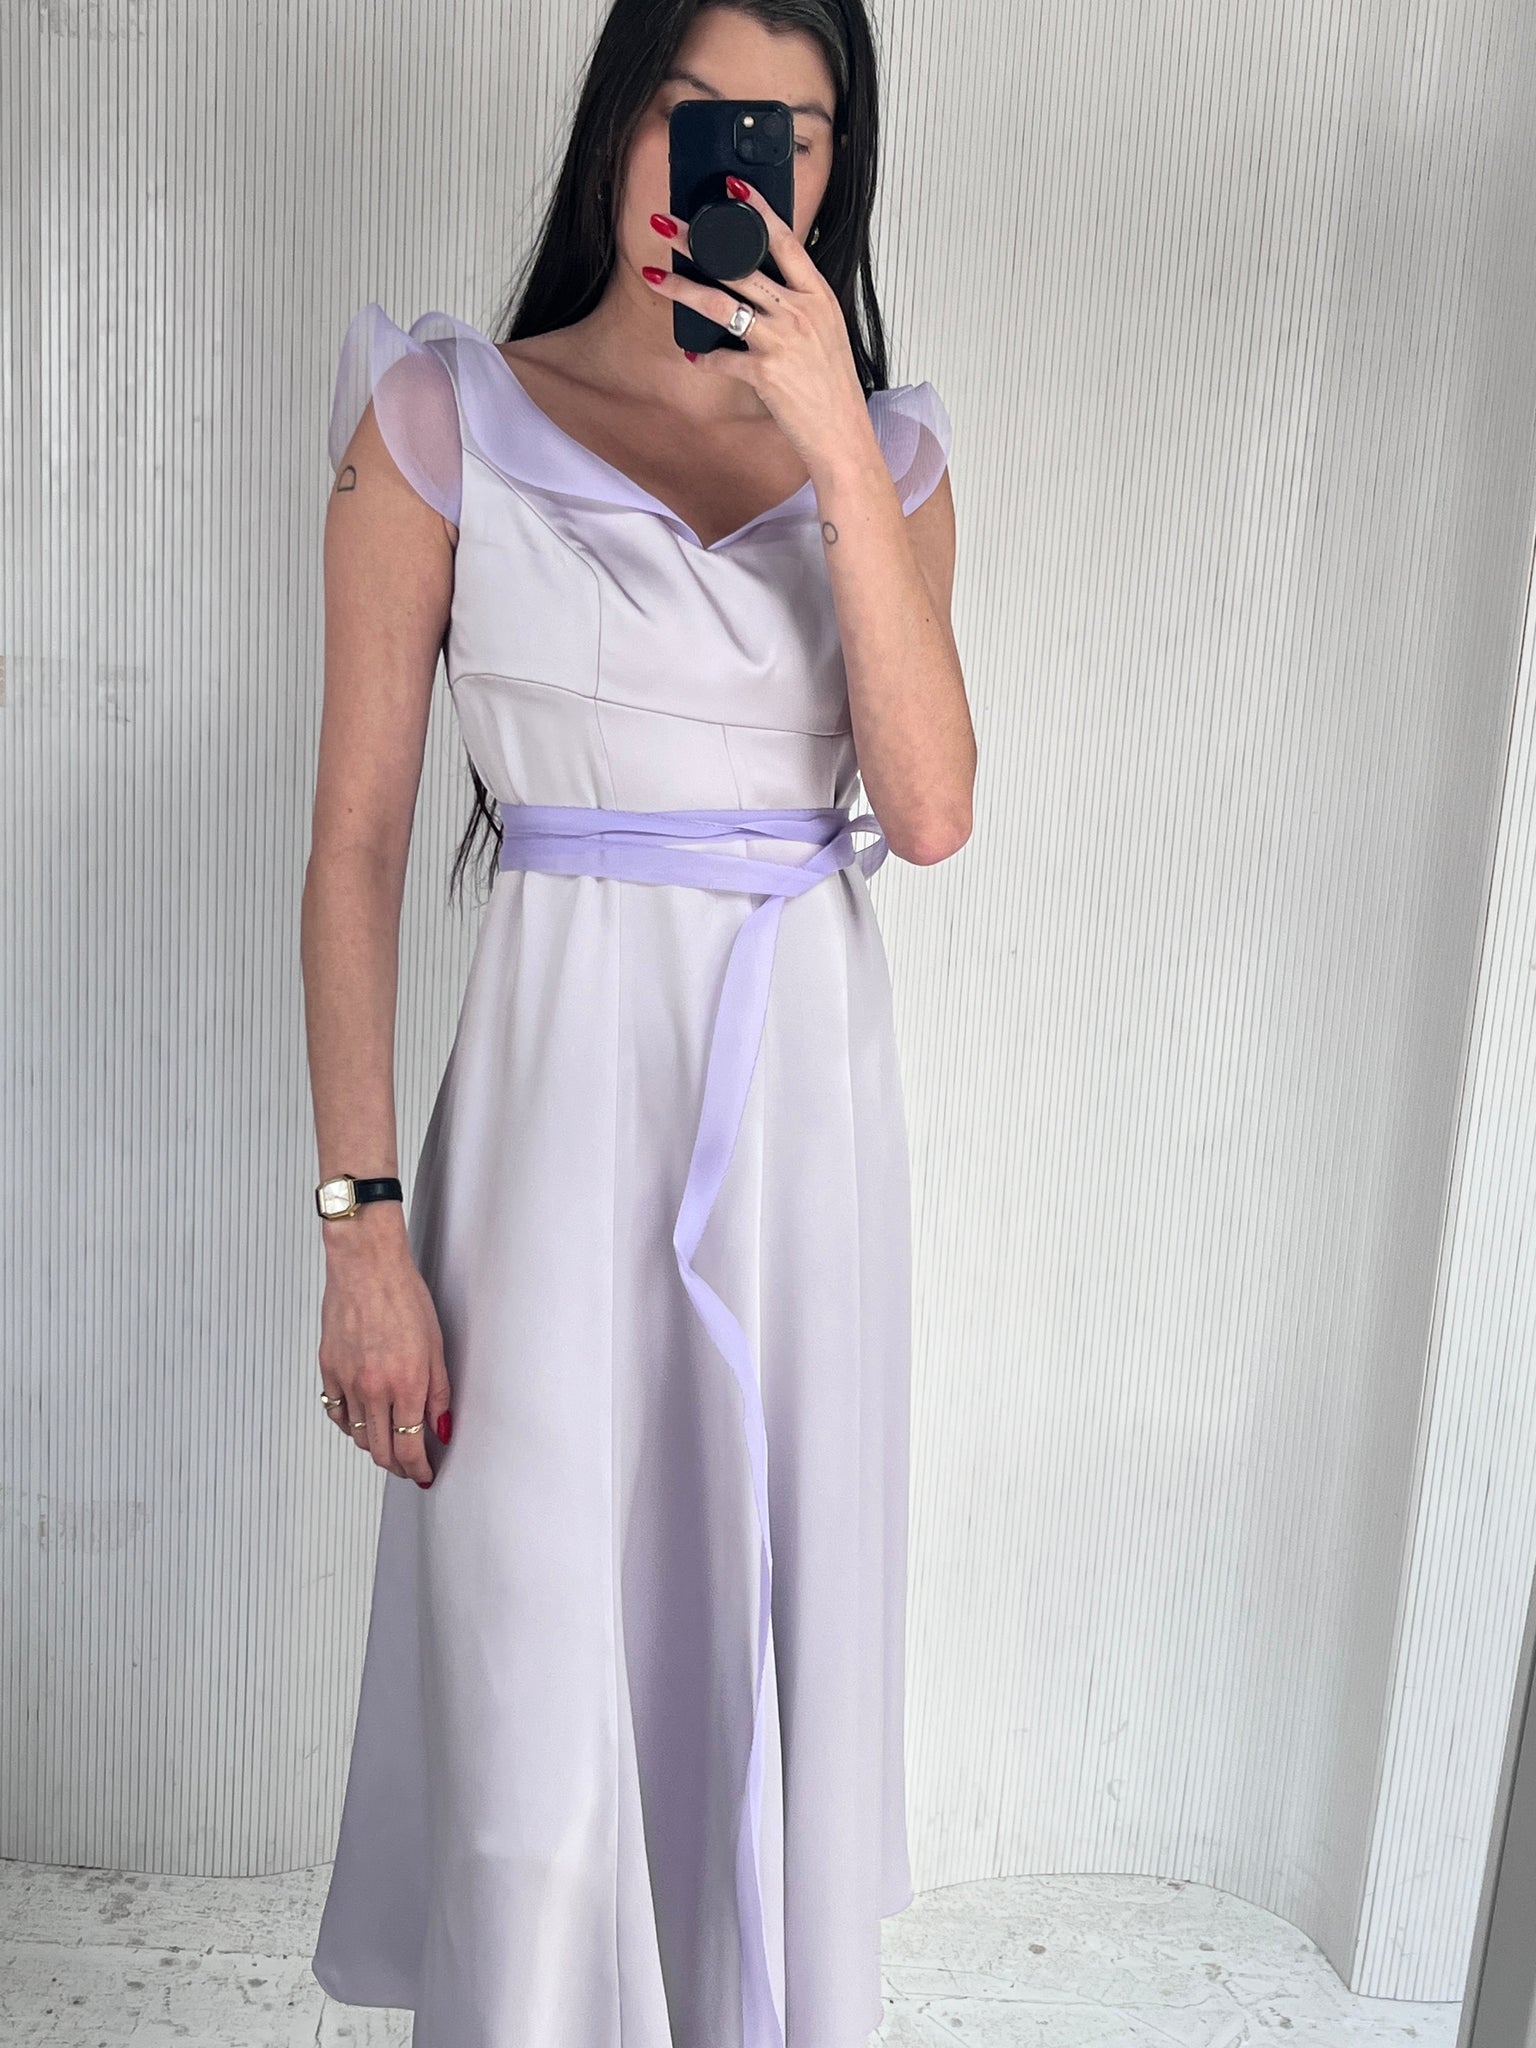 Armani Prive lavender dress